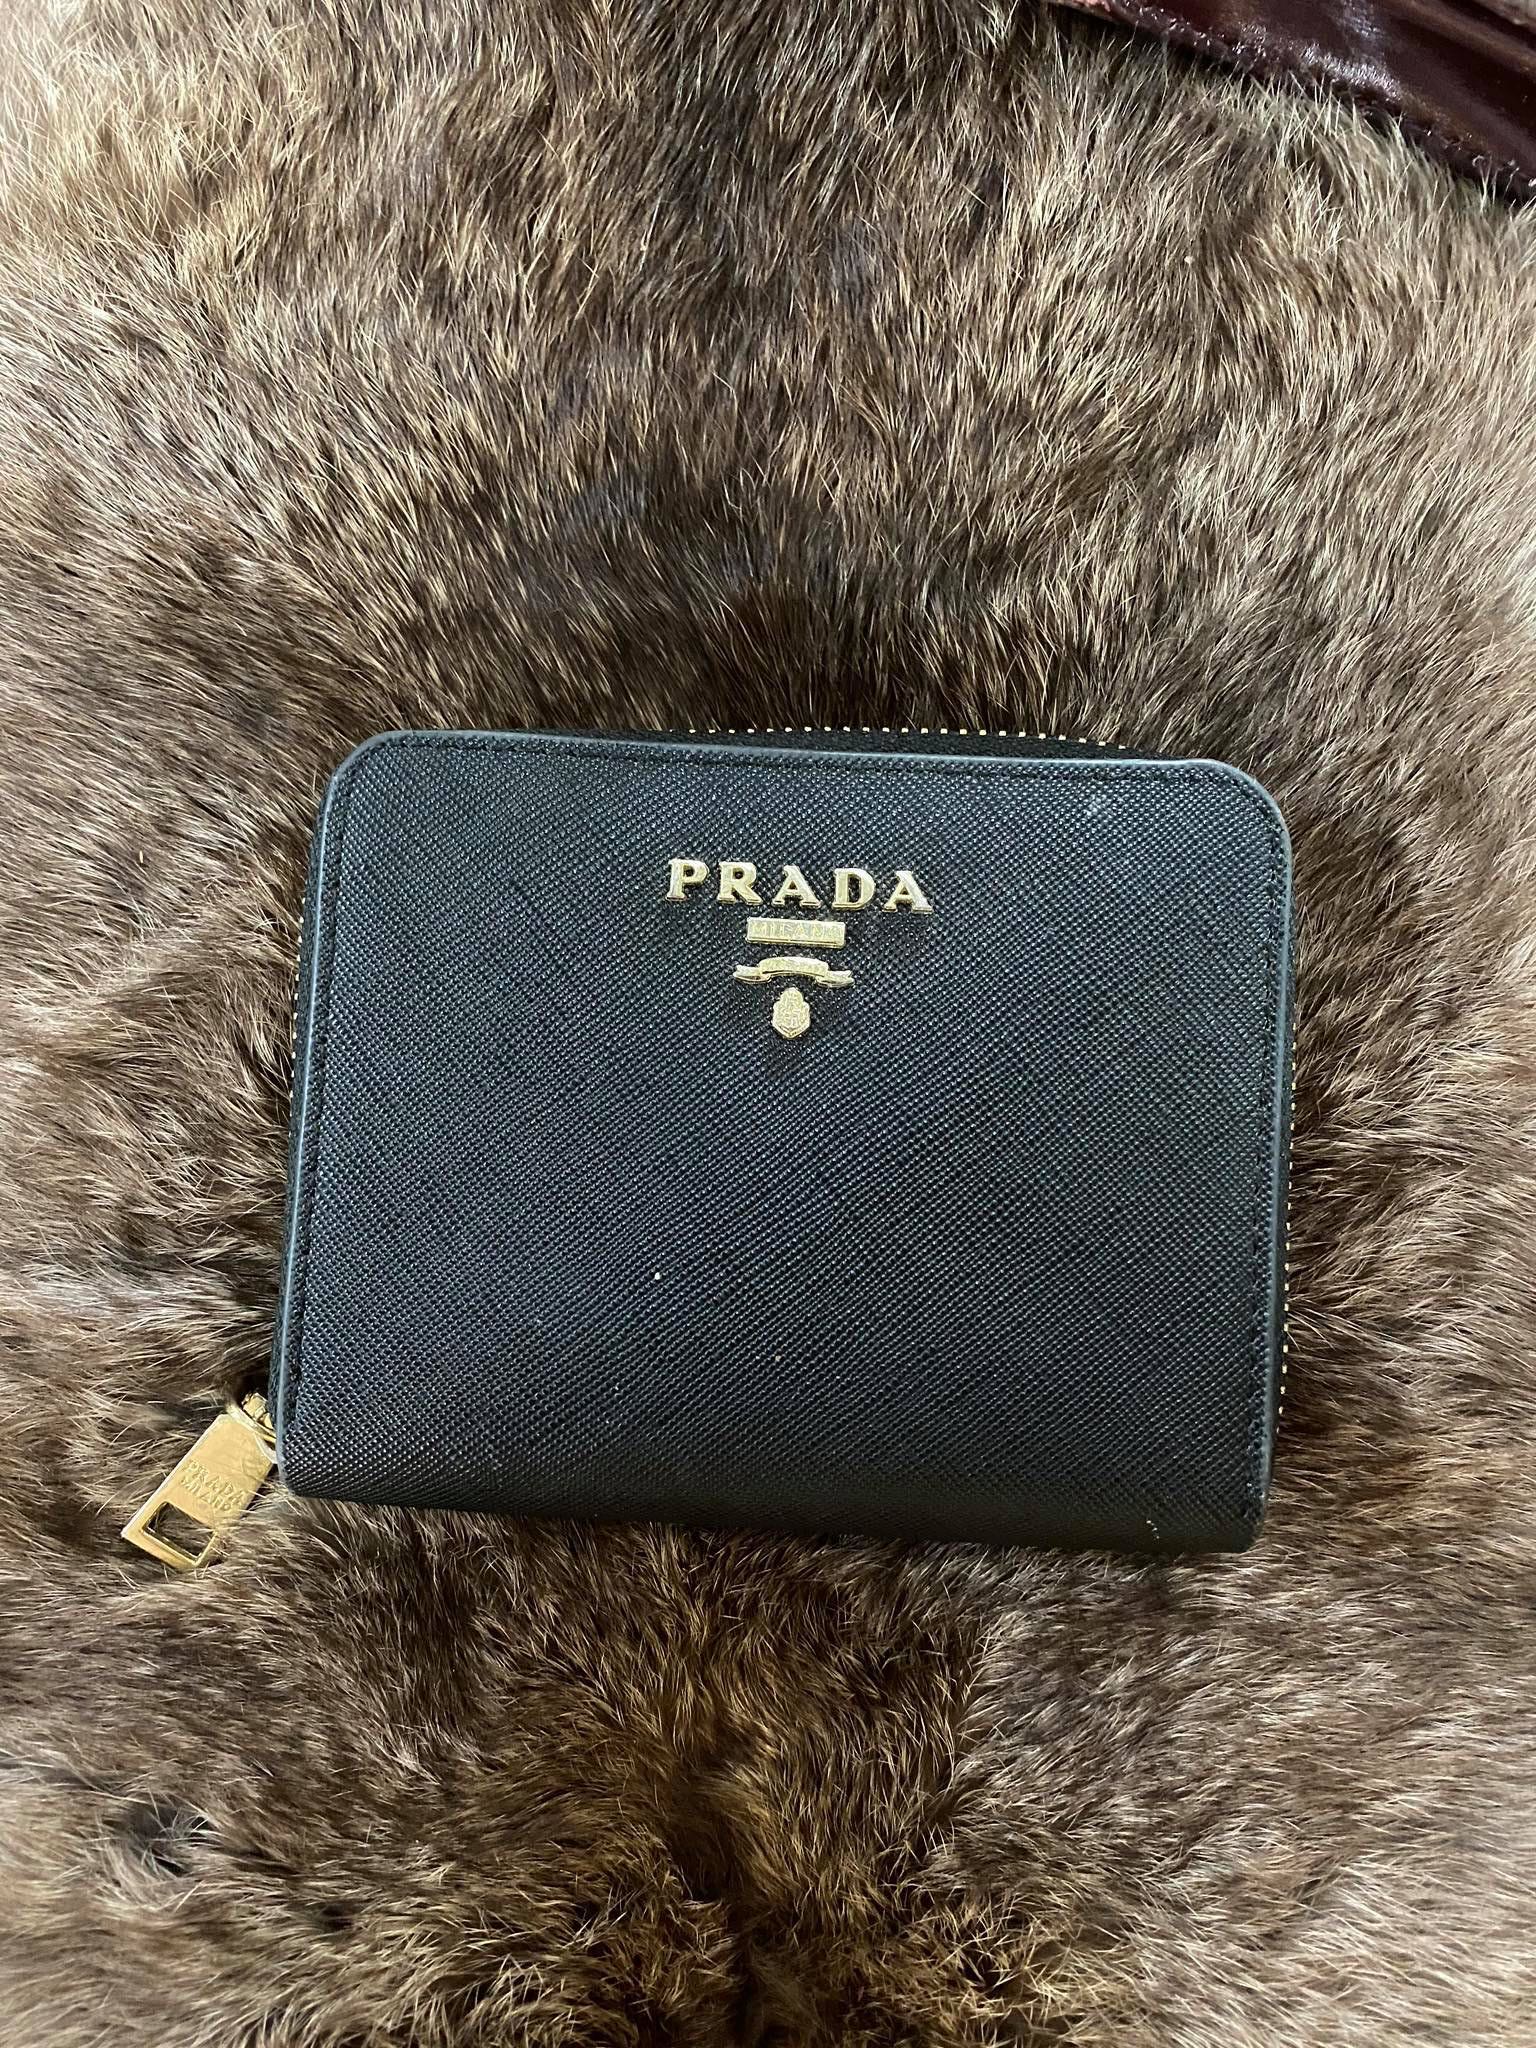 prada wallet original